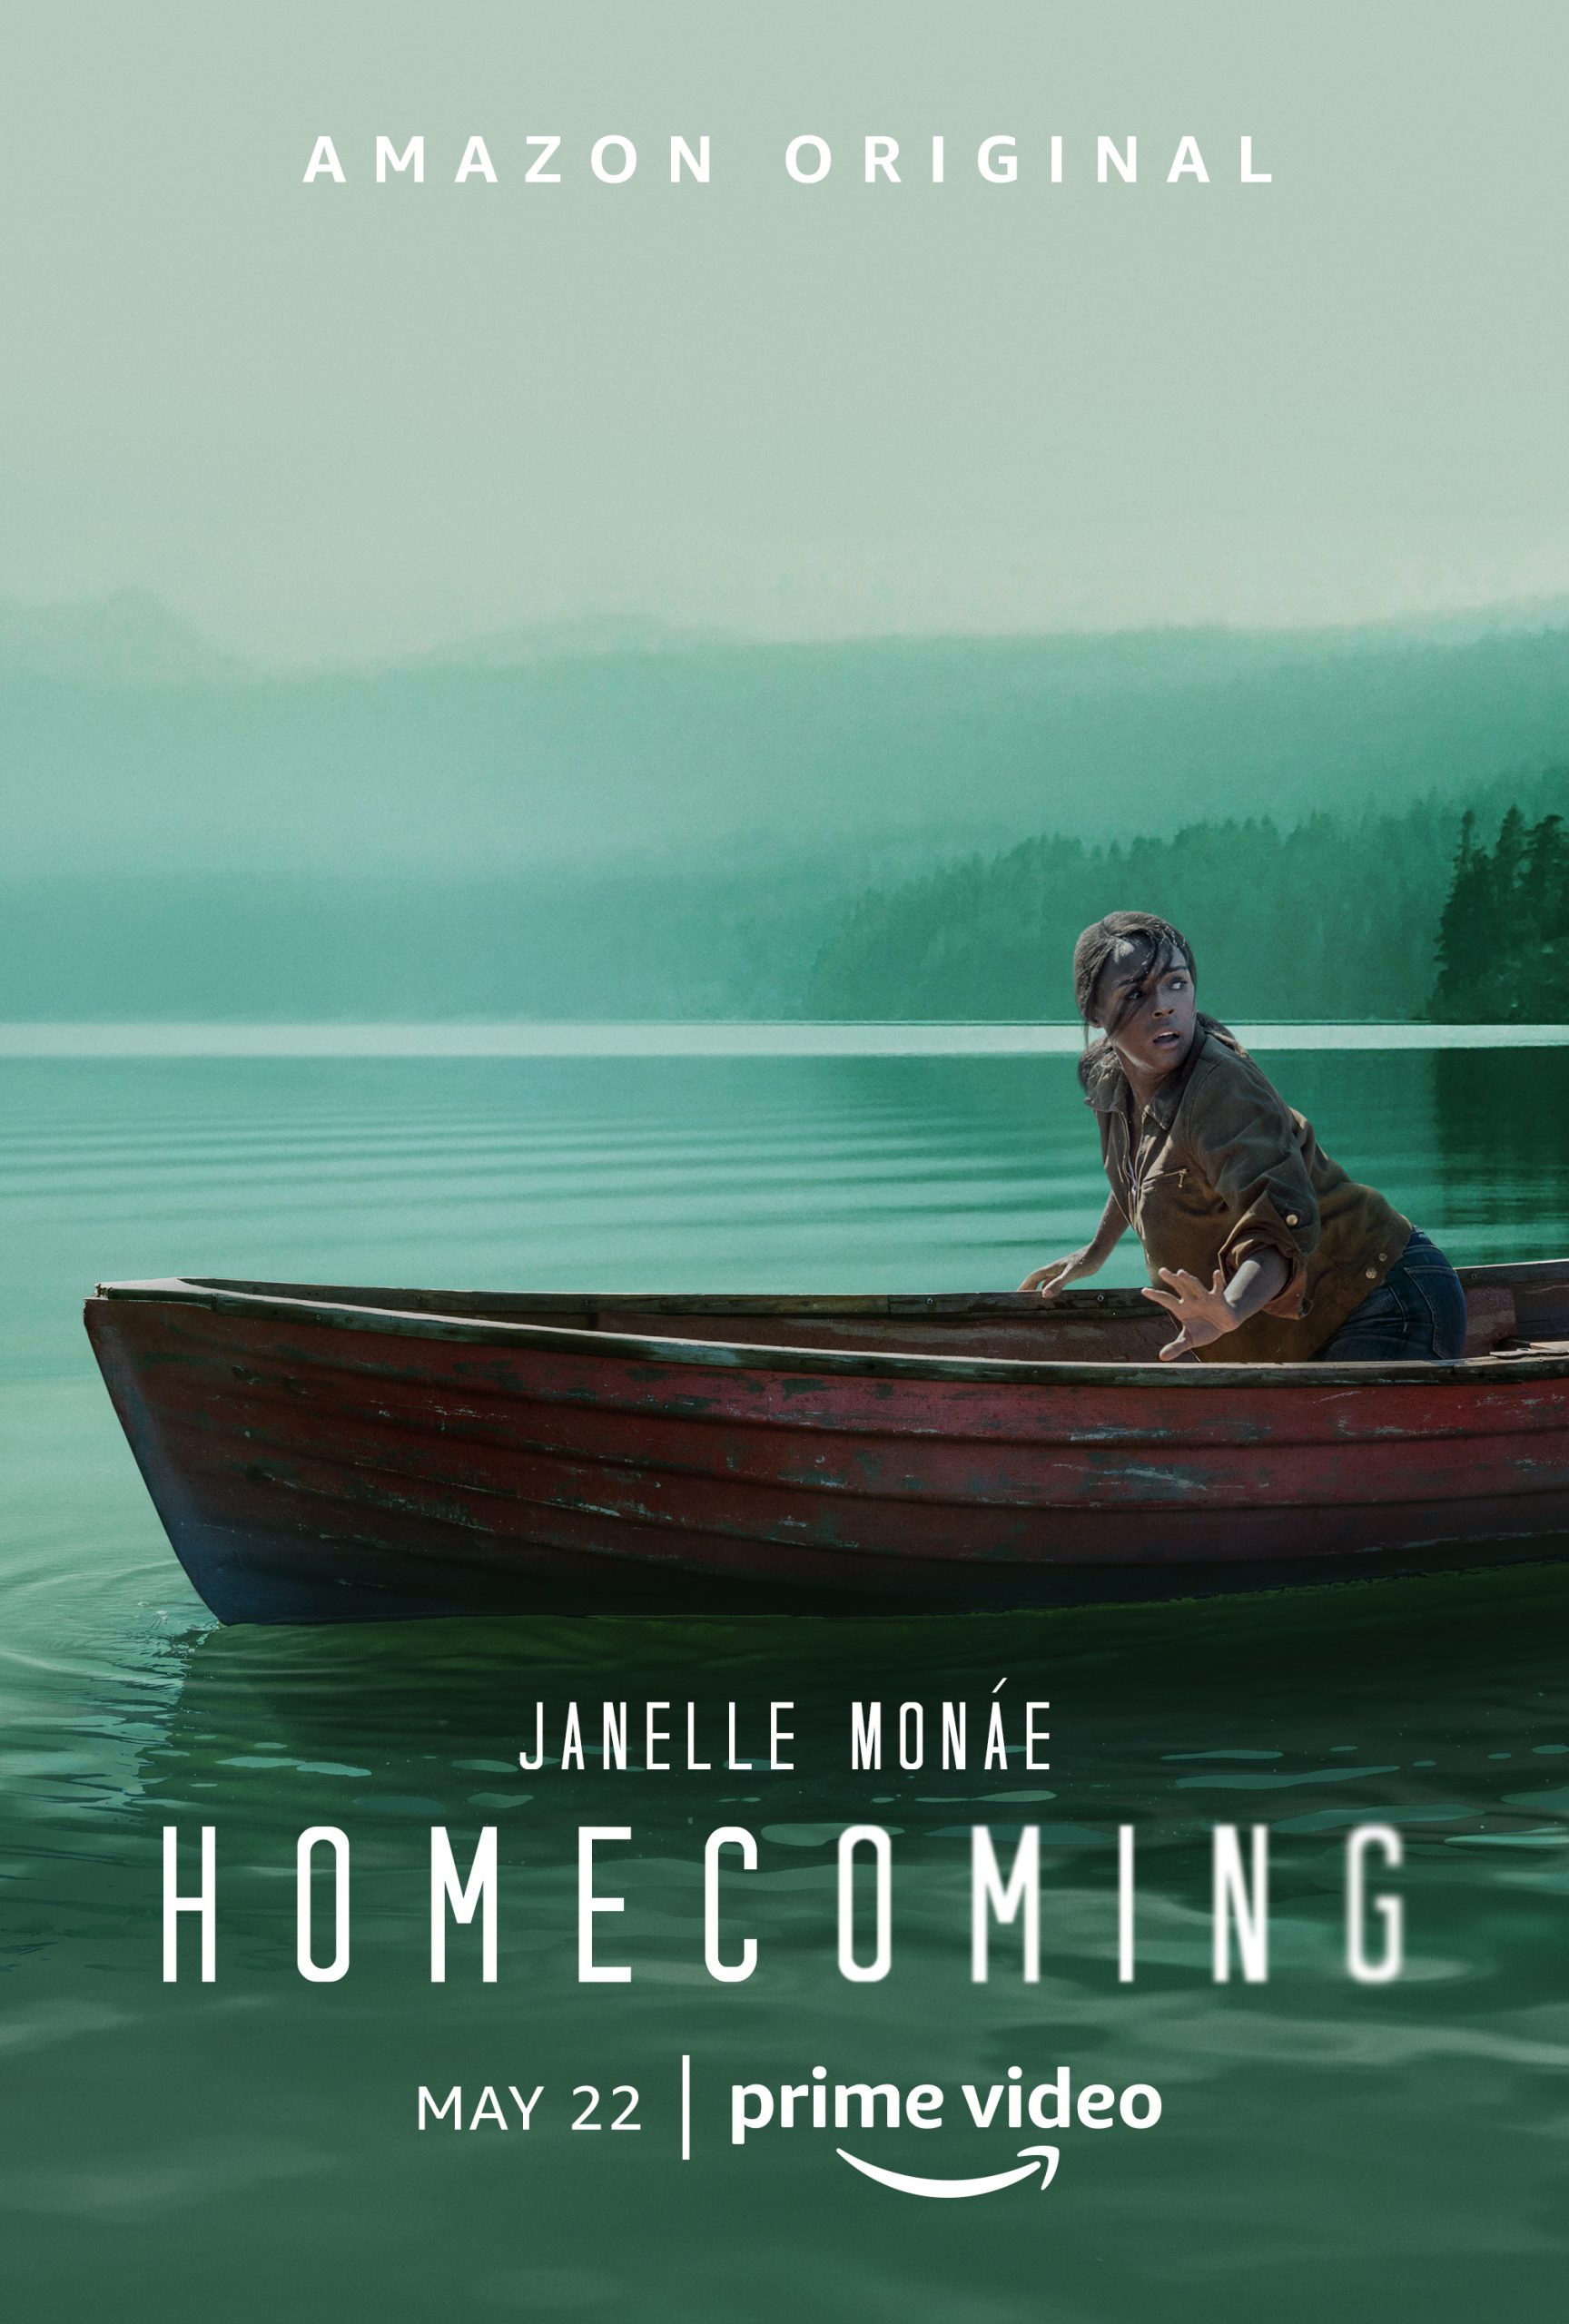 New Show: Homecoming Season 2 Starring Janelle Monae